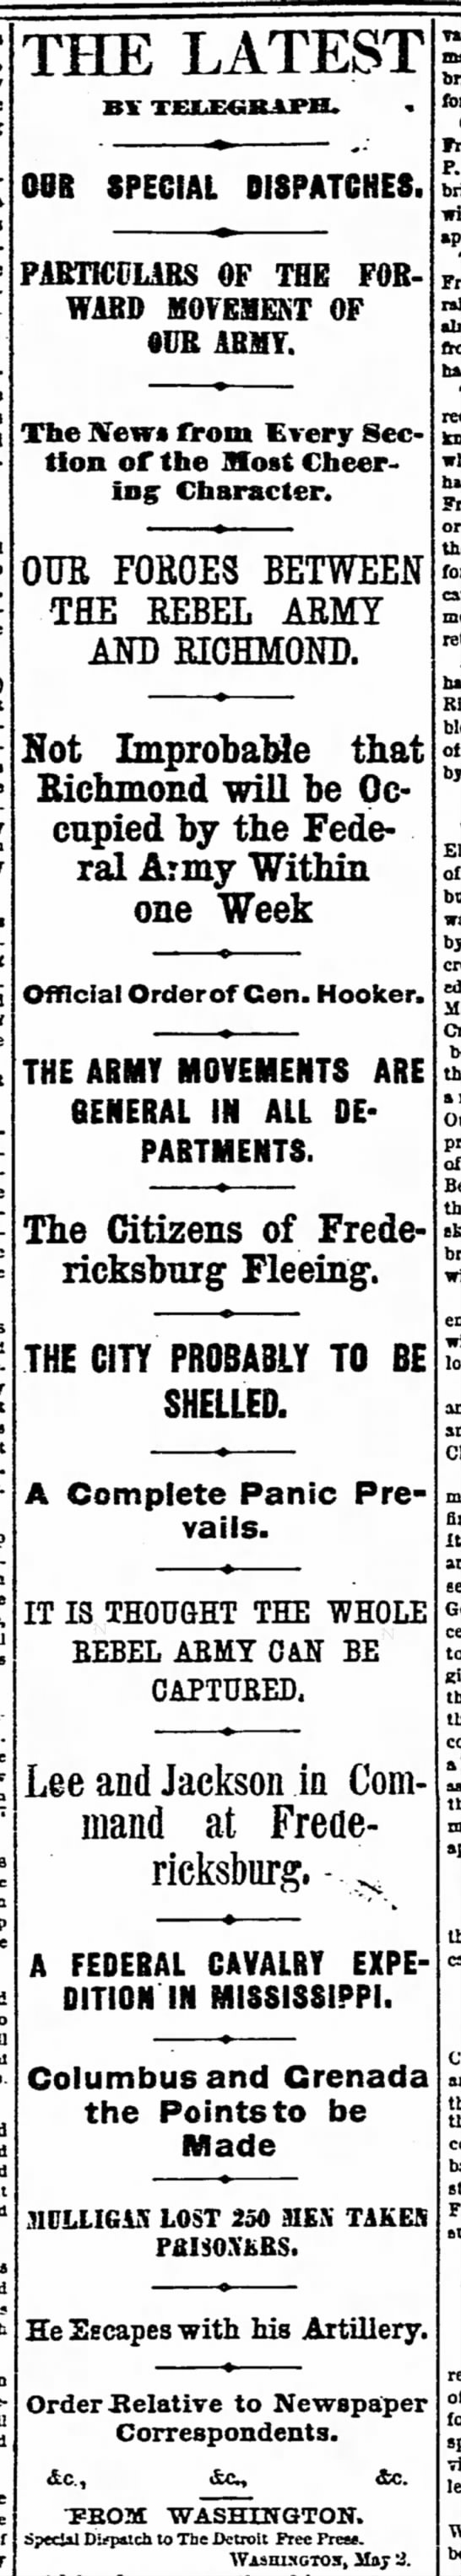 Civil War news via special dispatches to the Detroit Free Press - 